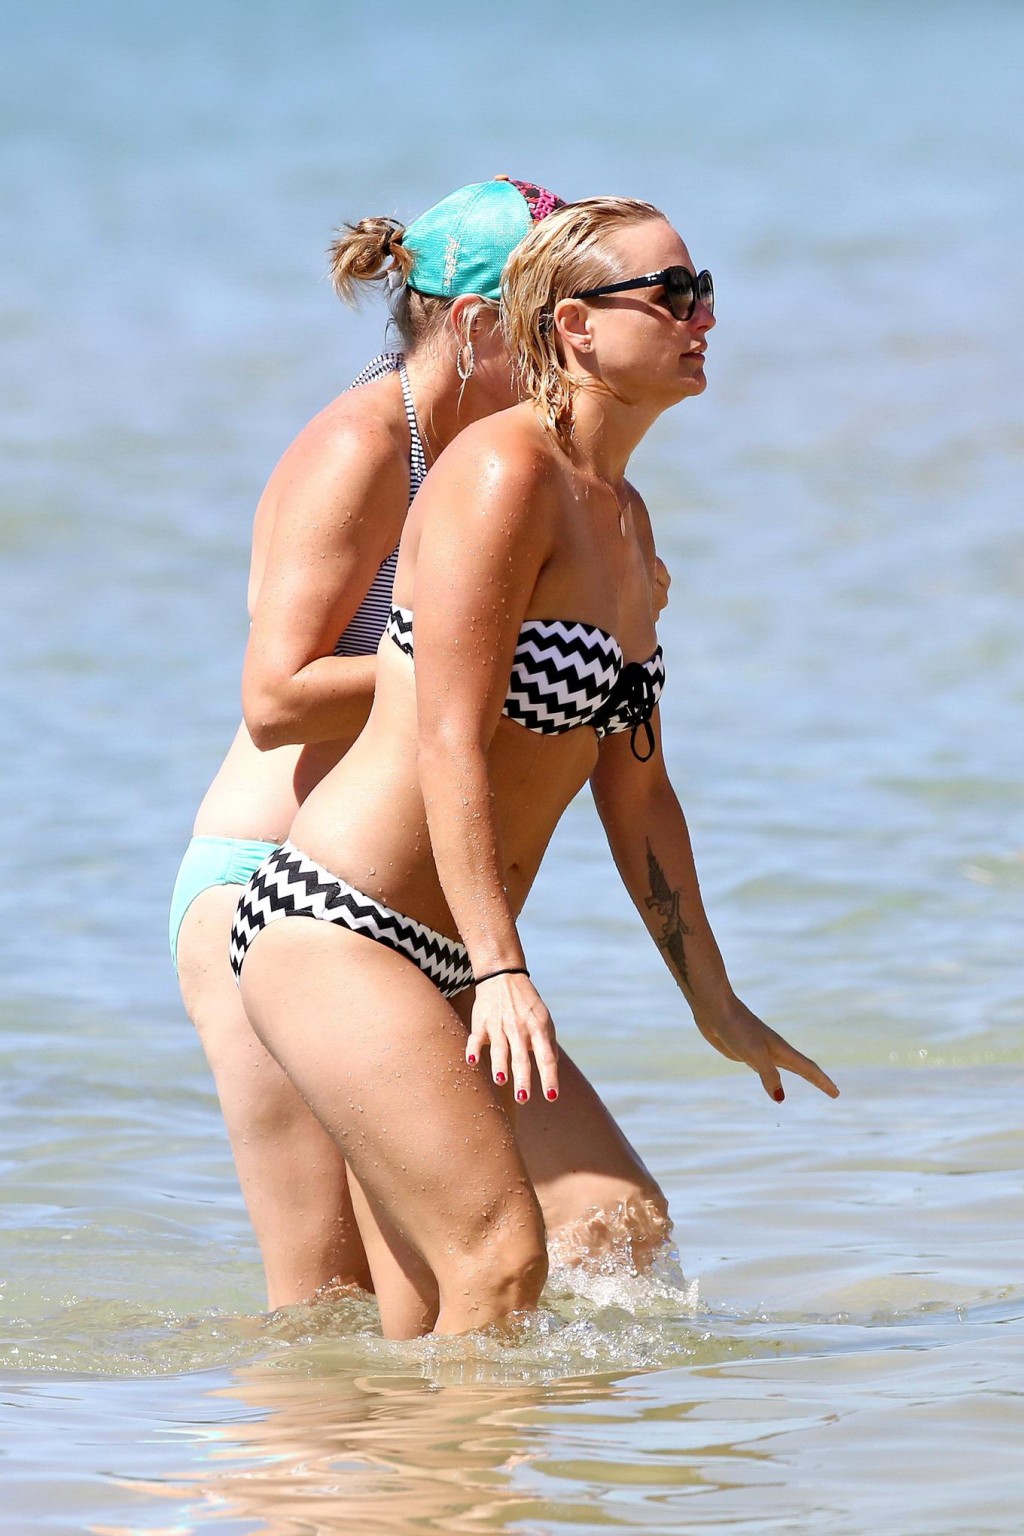 Miranda lambert portant un bikini monochrome sans bretelles sur une plage hawaïenne
 #75185158